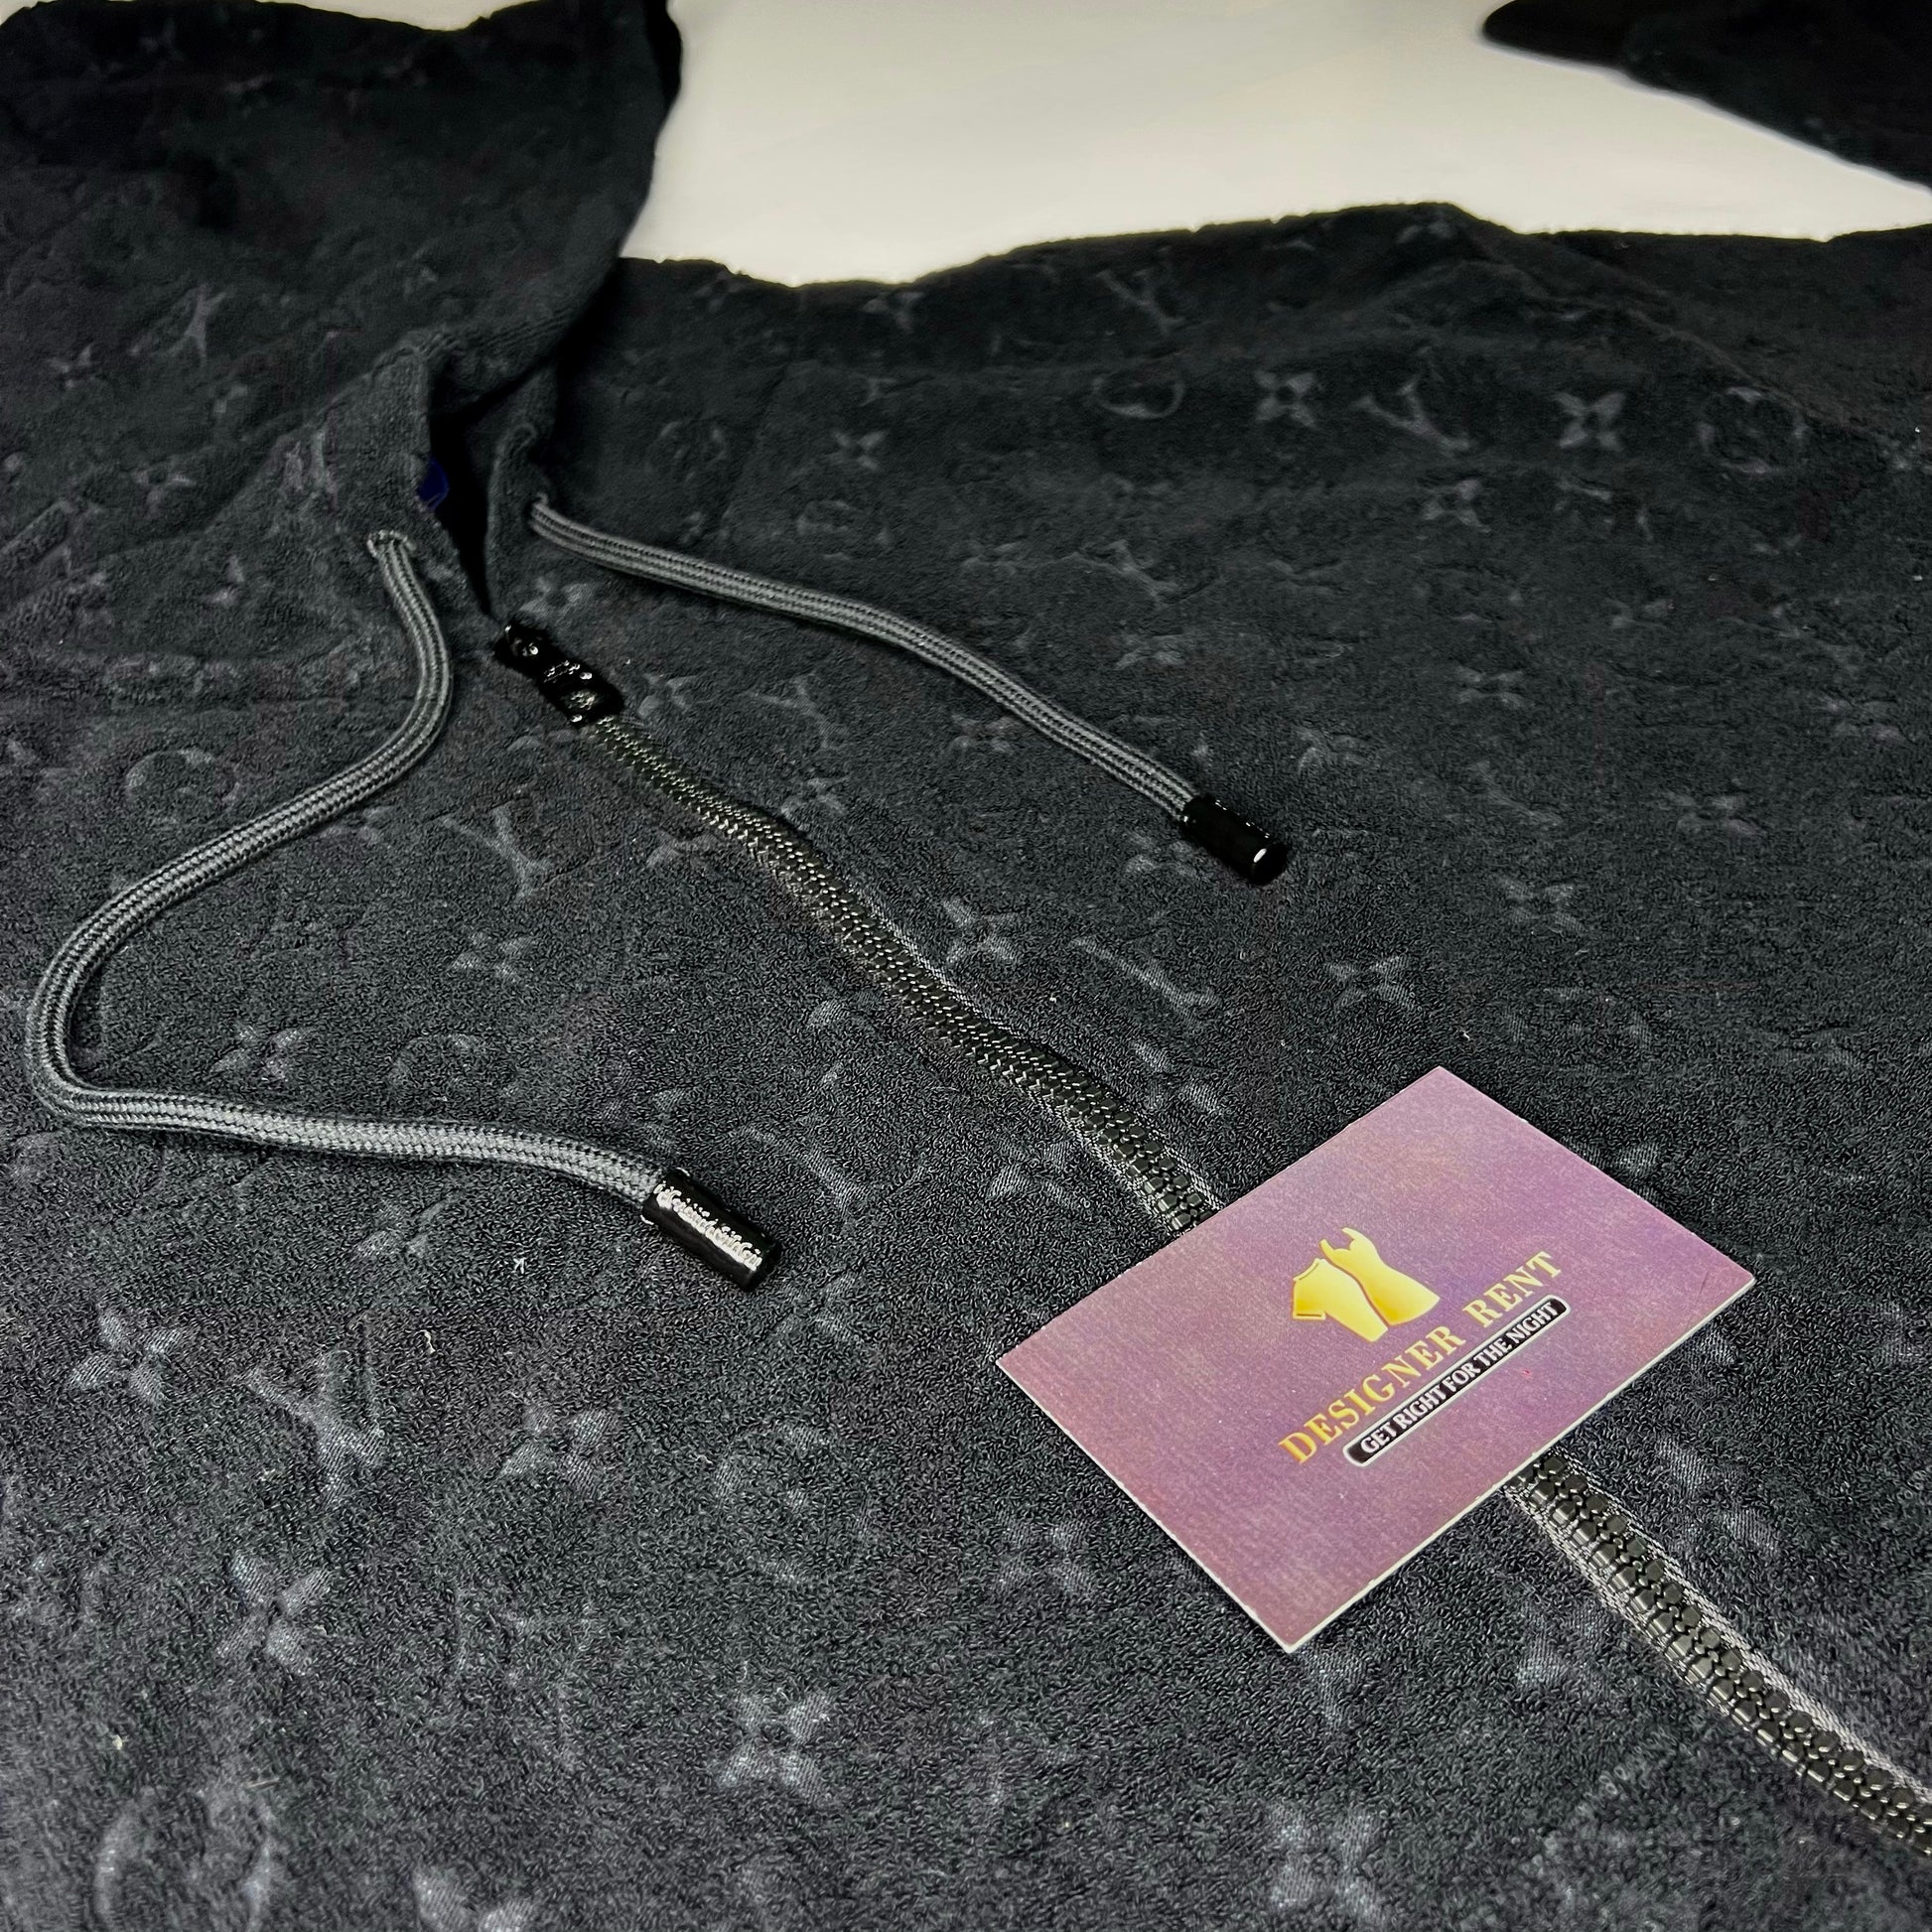 Louis Vuitton Monogram French Terry Zip-Through Hoodie BLACK. Size M0